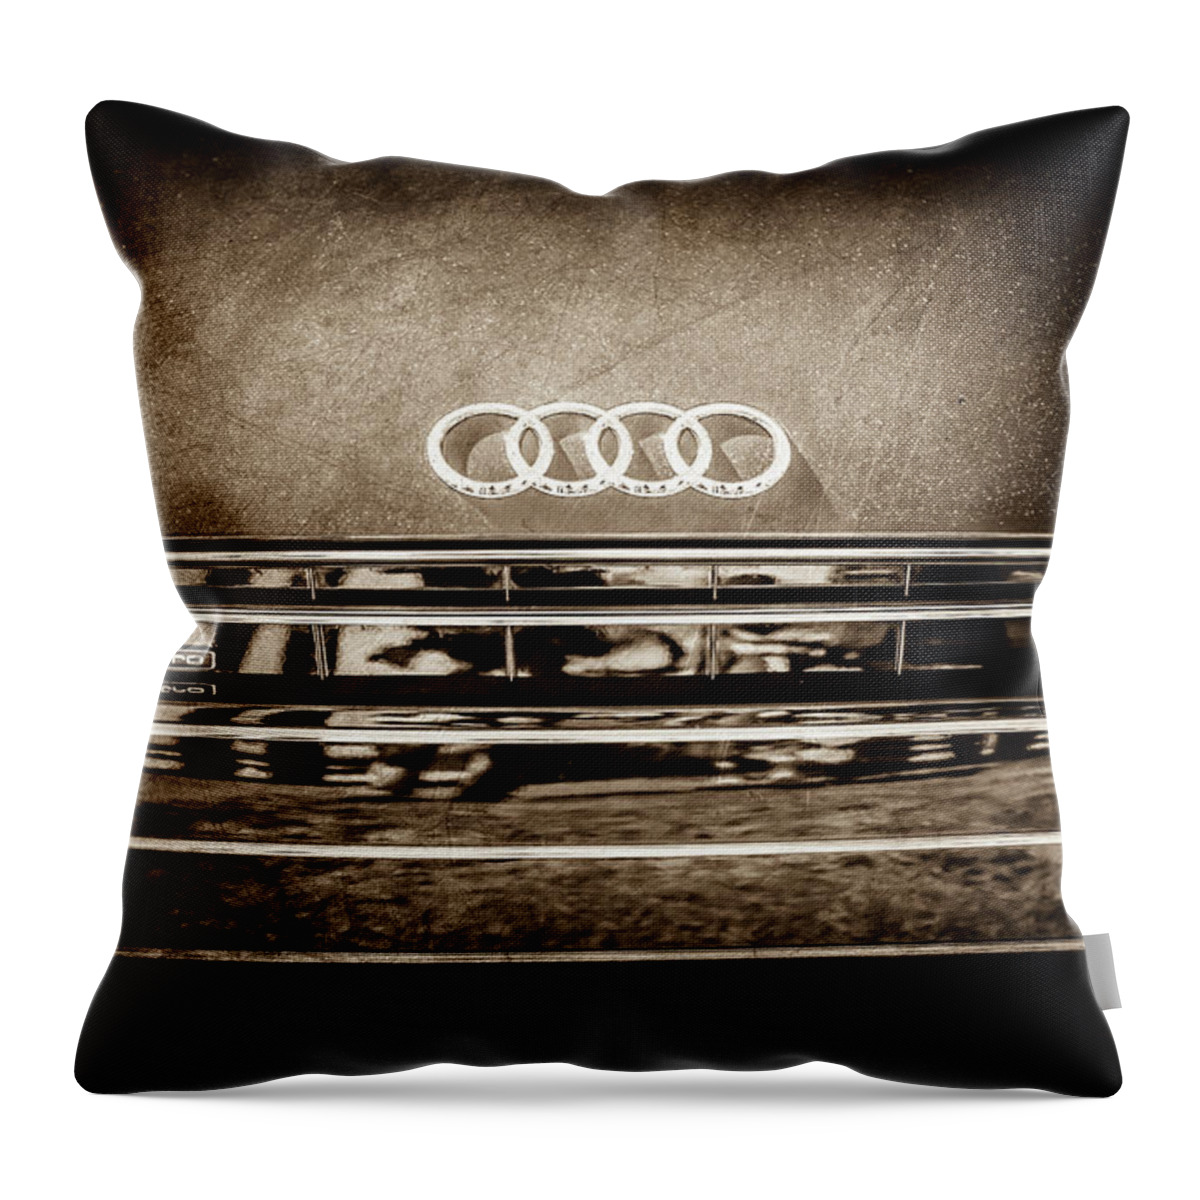 Audi Grille Emblem Throw Pillow featuring the photograph Audi Grille Emblem -2333s by Jill Reger